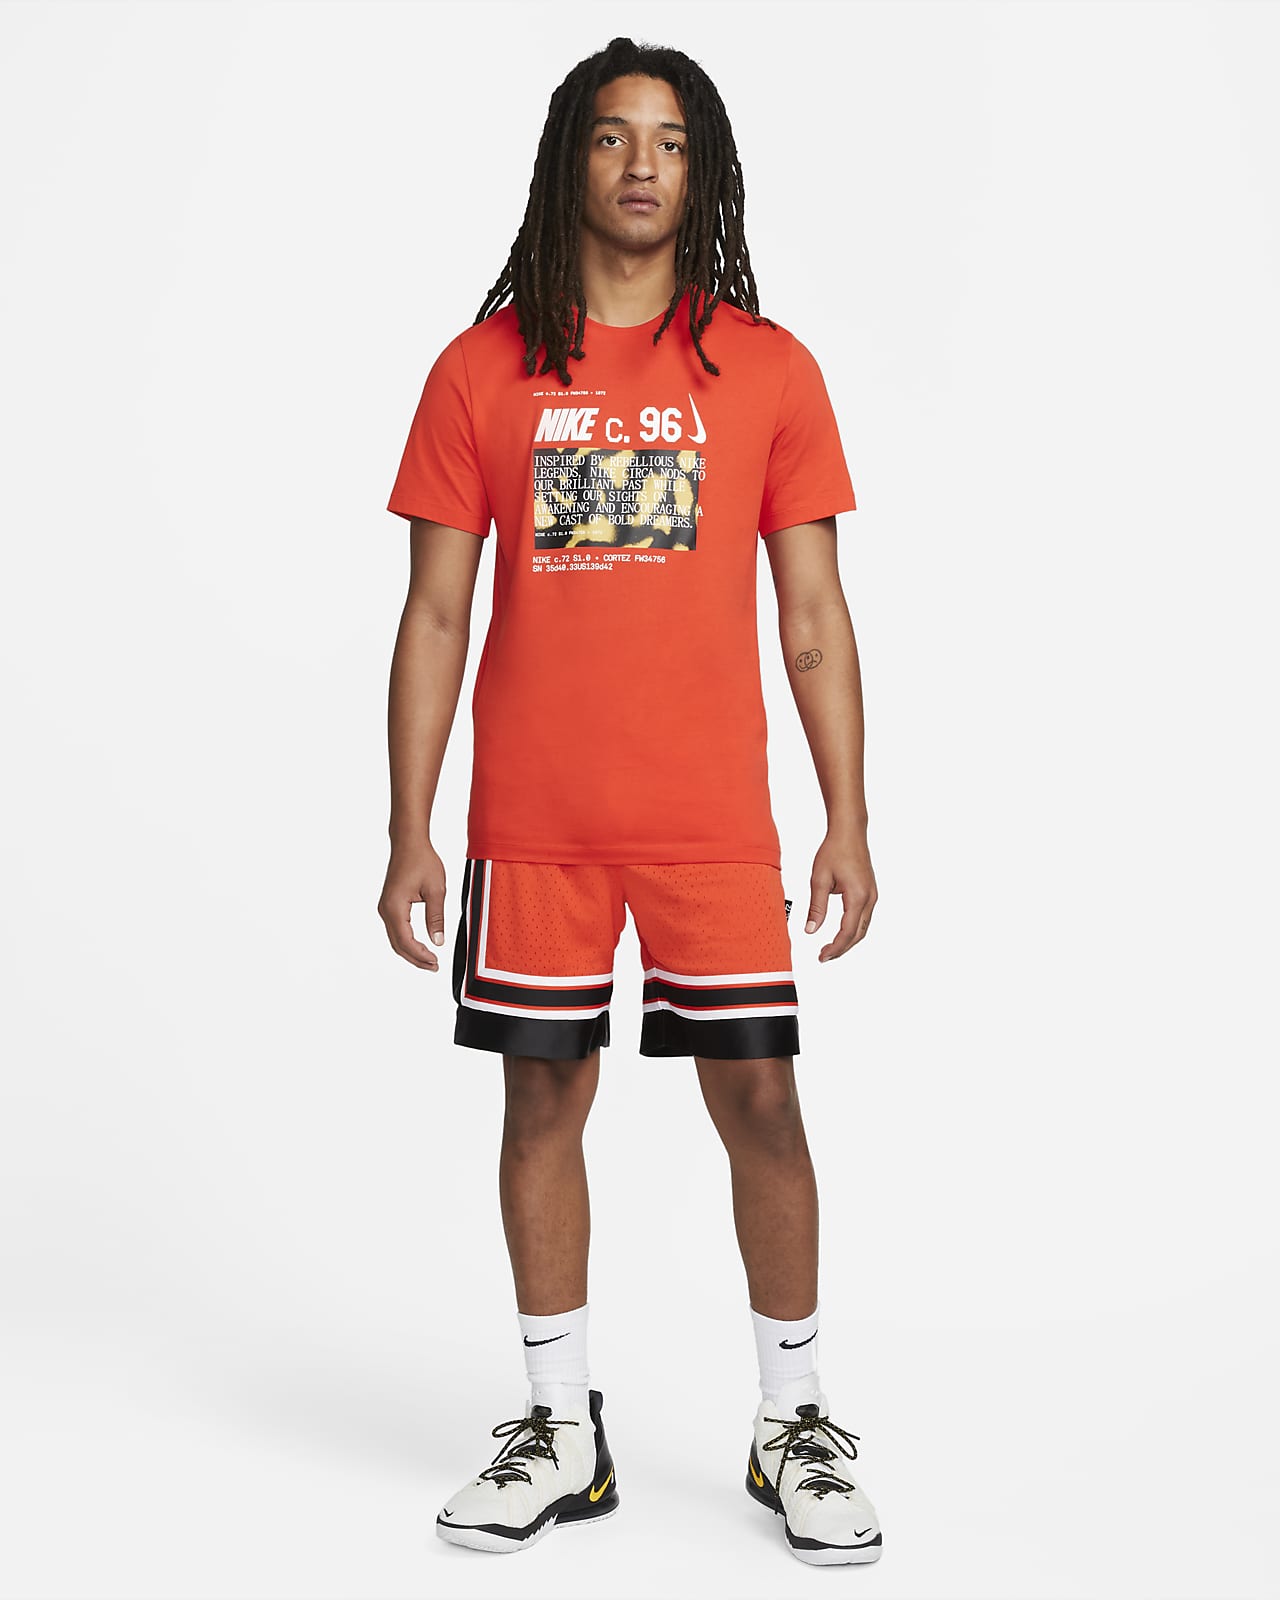 Men's Basketball Shorts. Nike NL